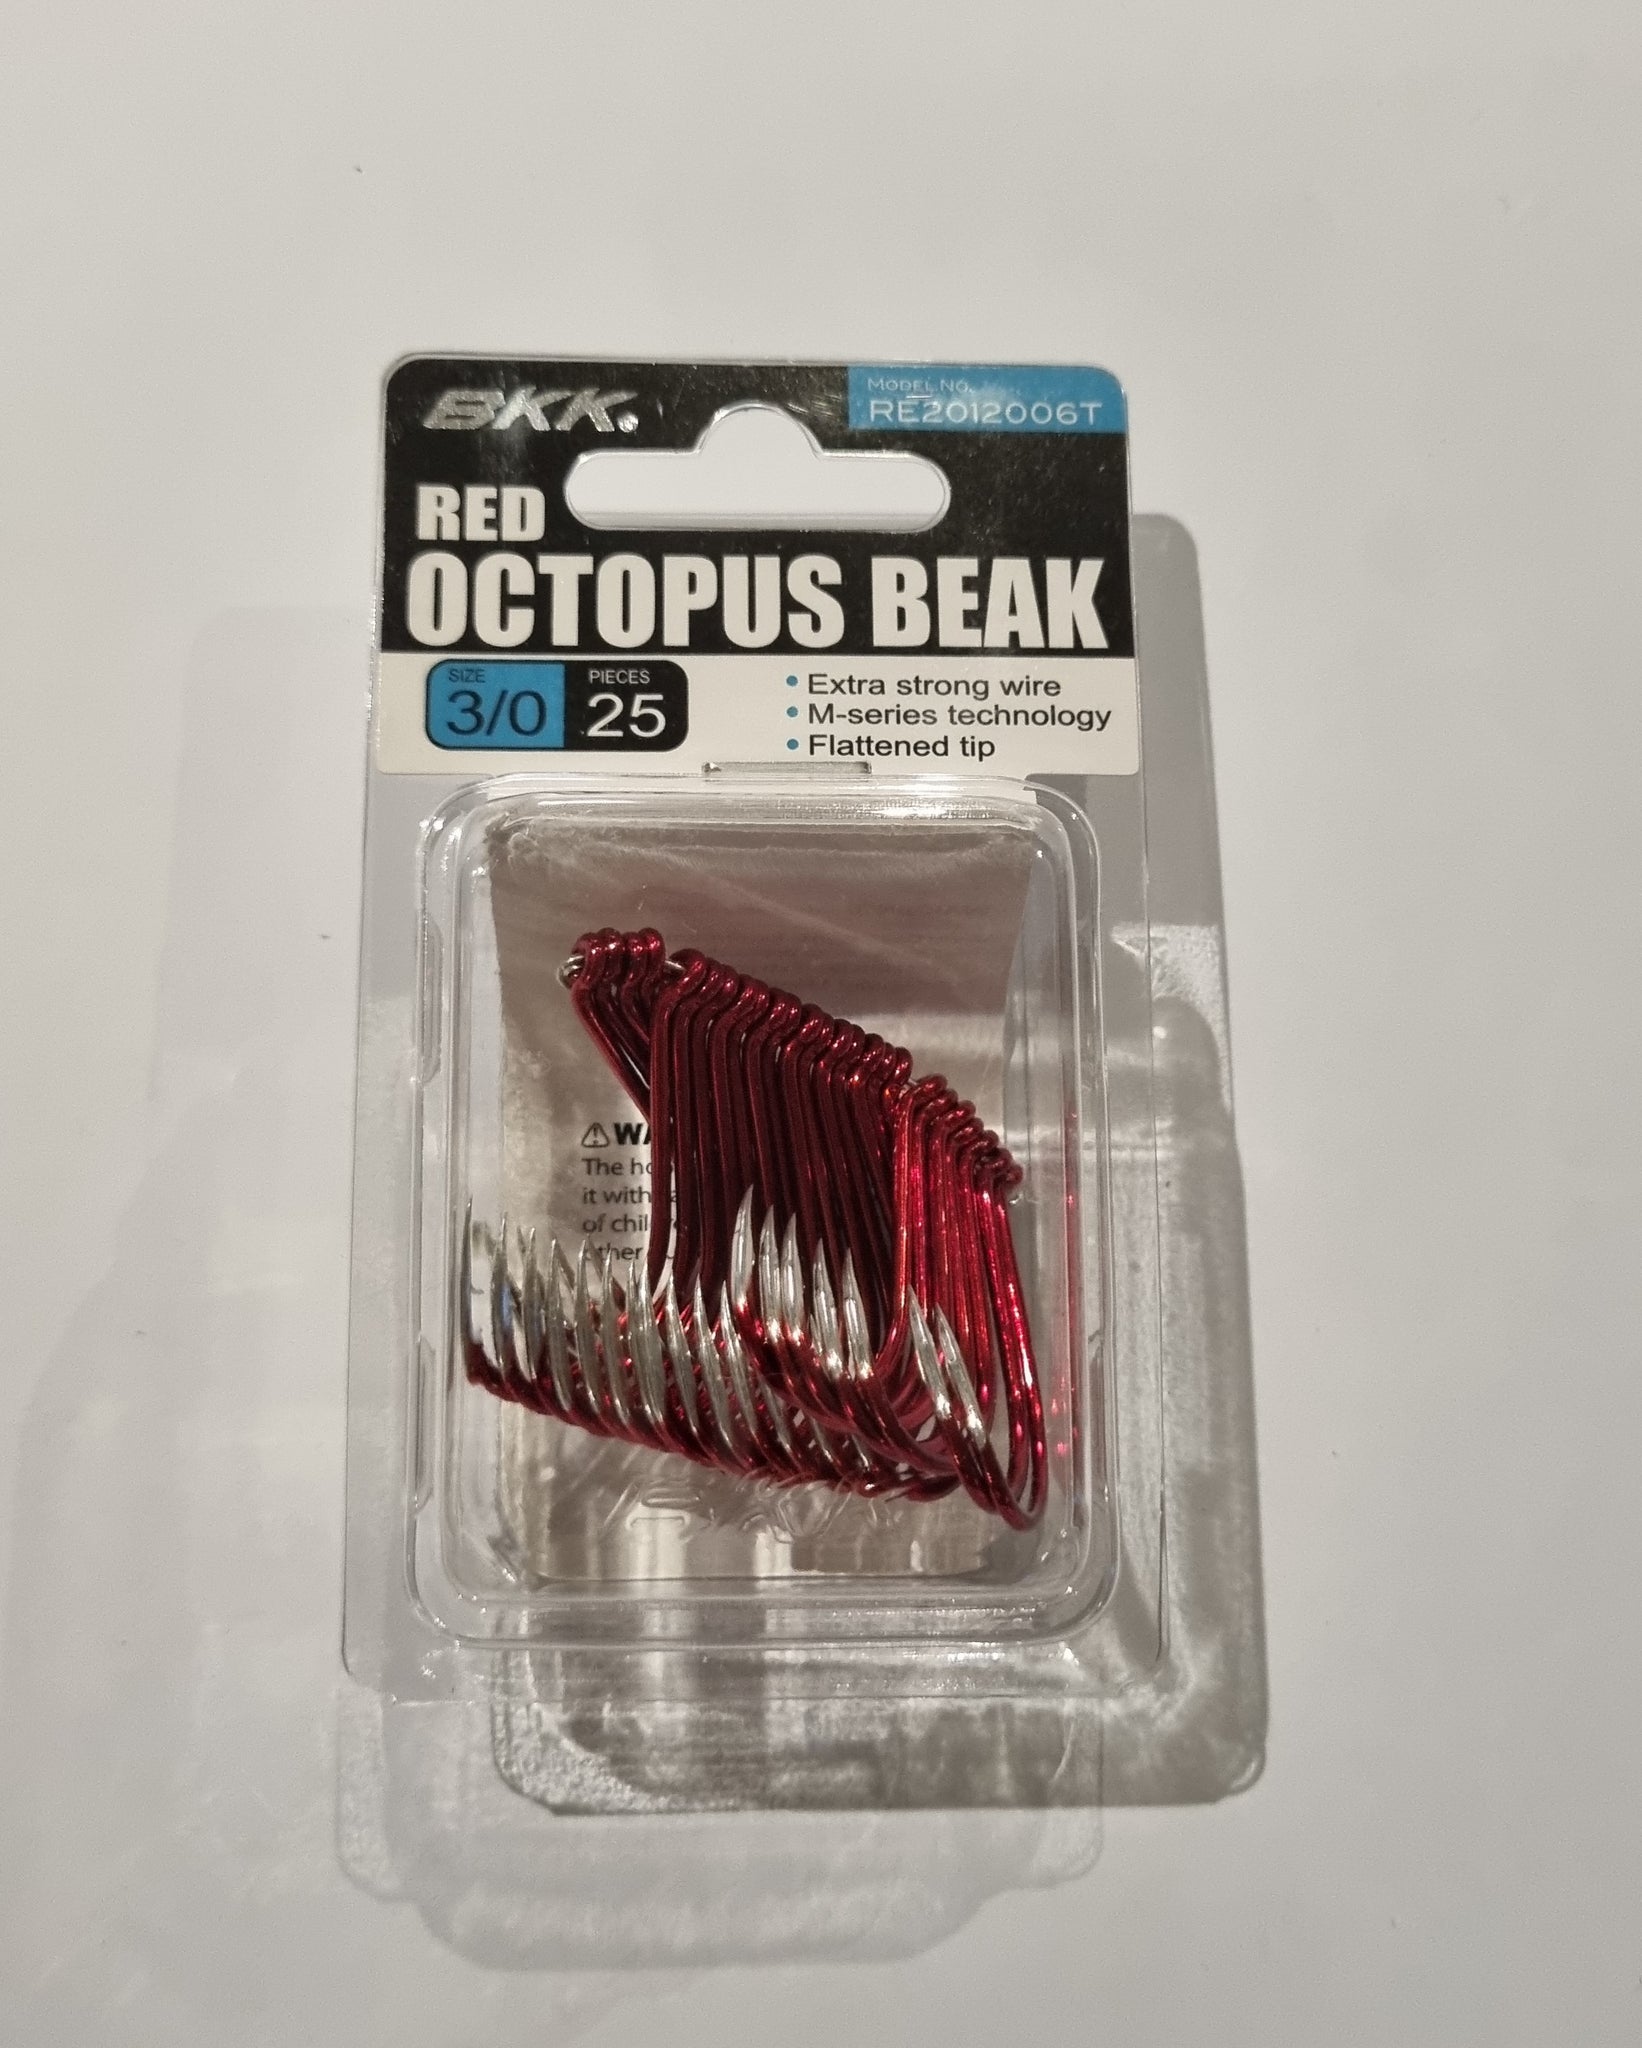 BKK Octopus Beak Hooks Red Qty 25, Size: 3/0